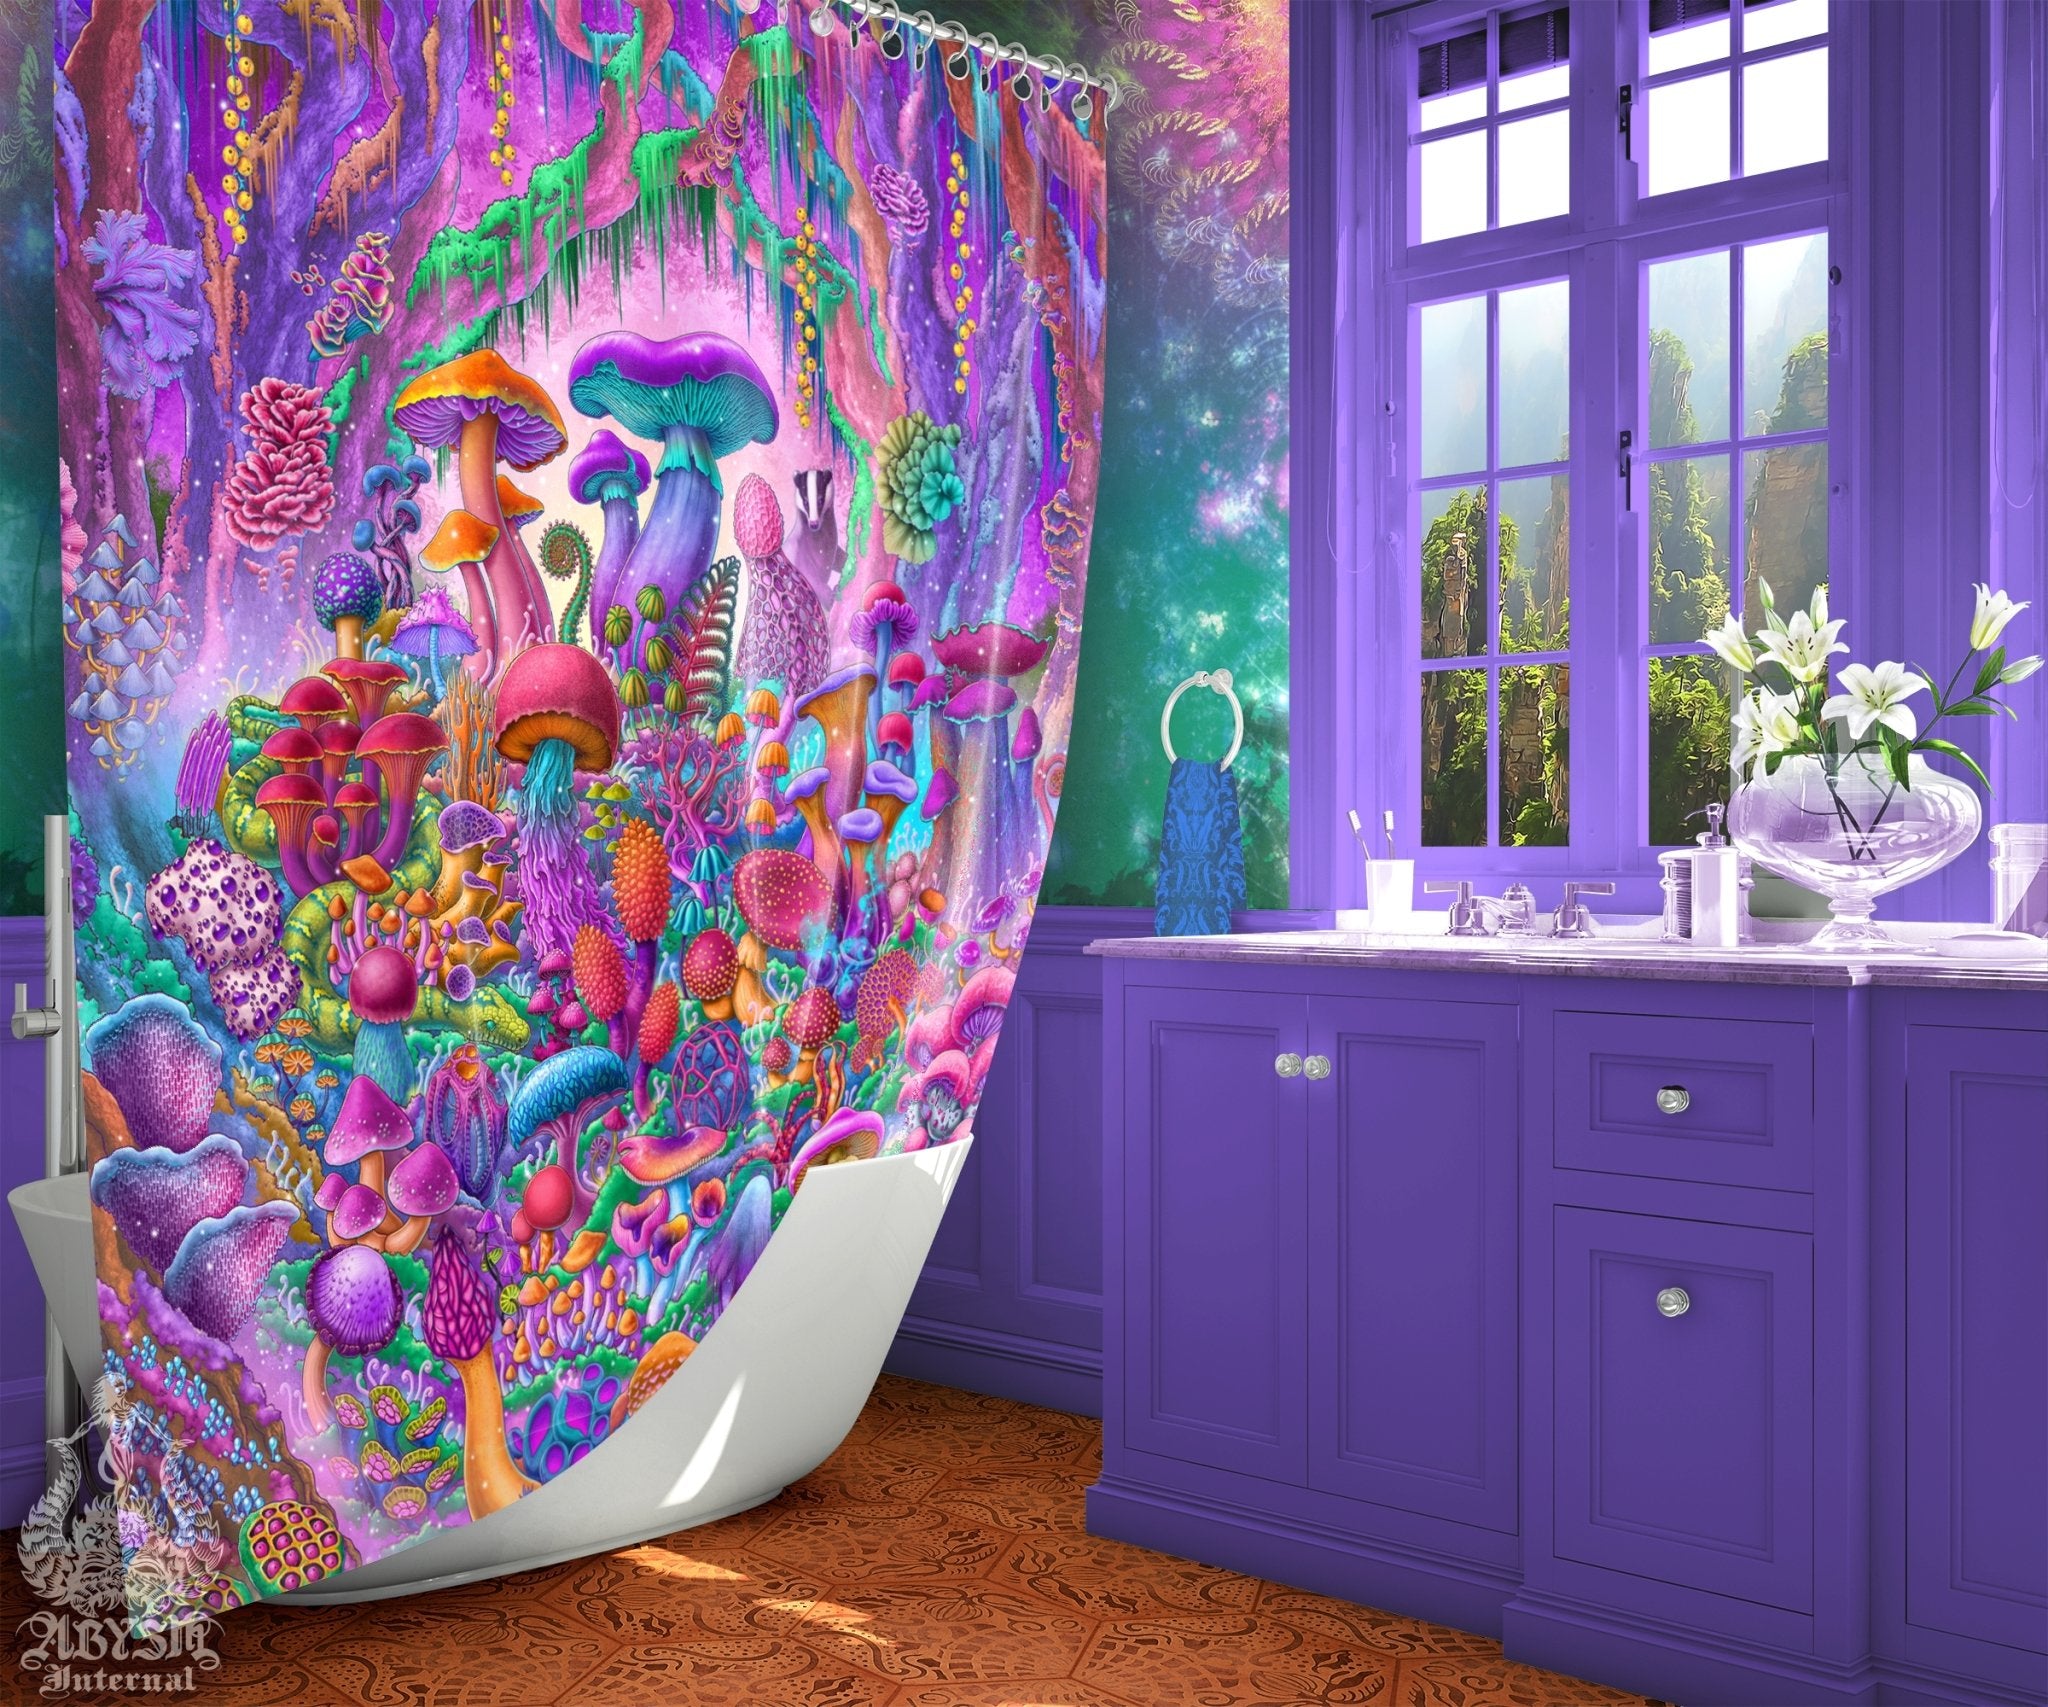 Pastel Mushrooms Shower Curtain, 71x74 inches, Girl Bathroom Decor